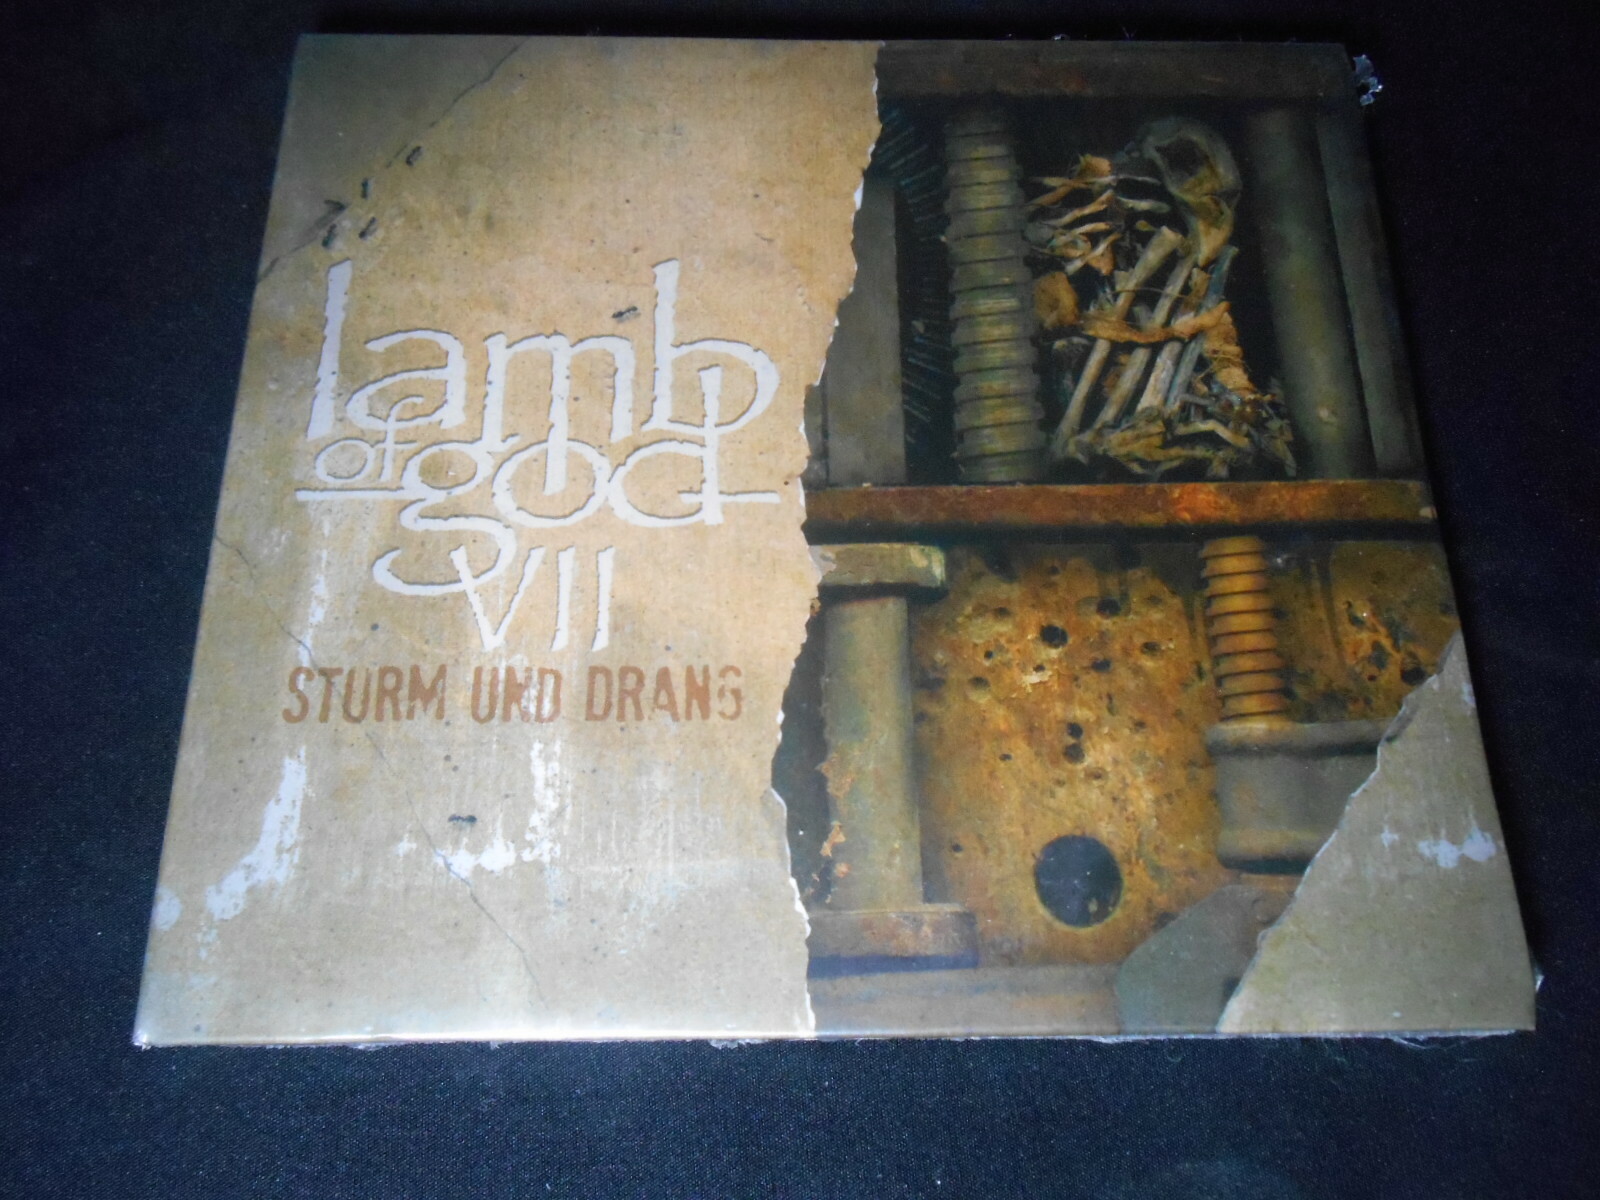 CD - Lamb of God - VII Sturm Und Drang (Lacrado/Digipack)